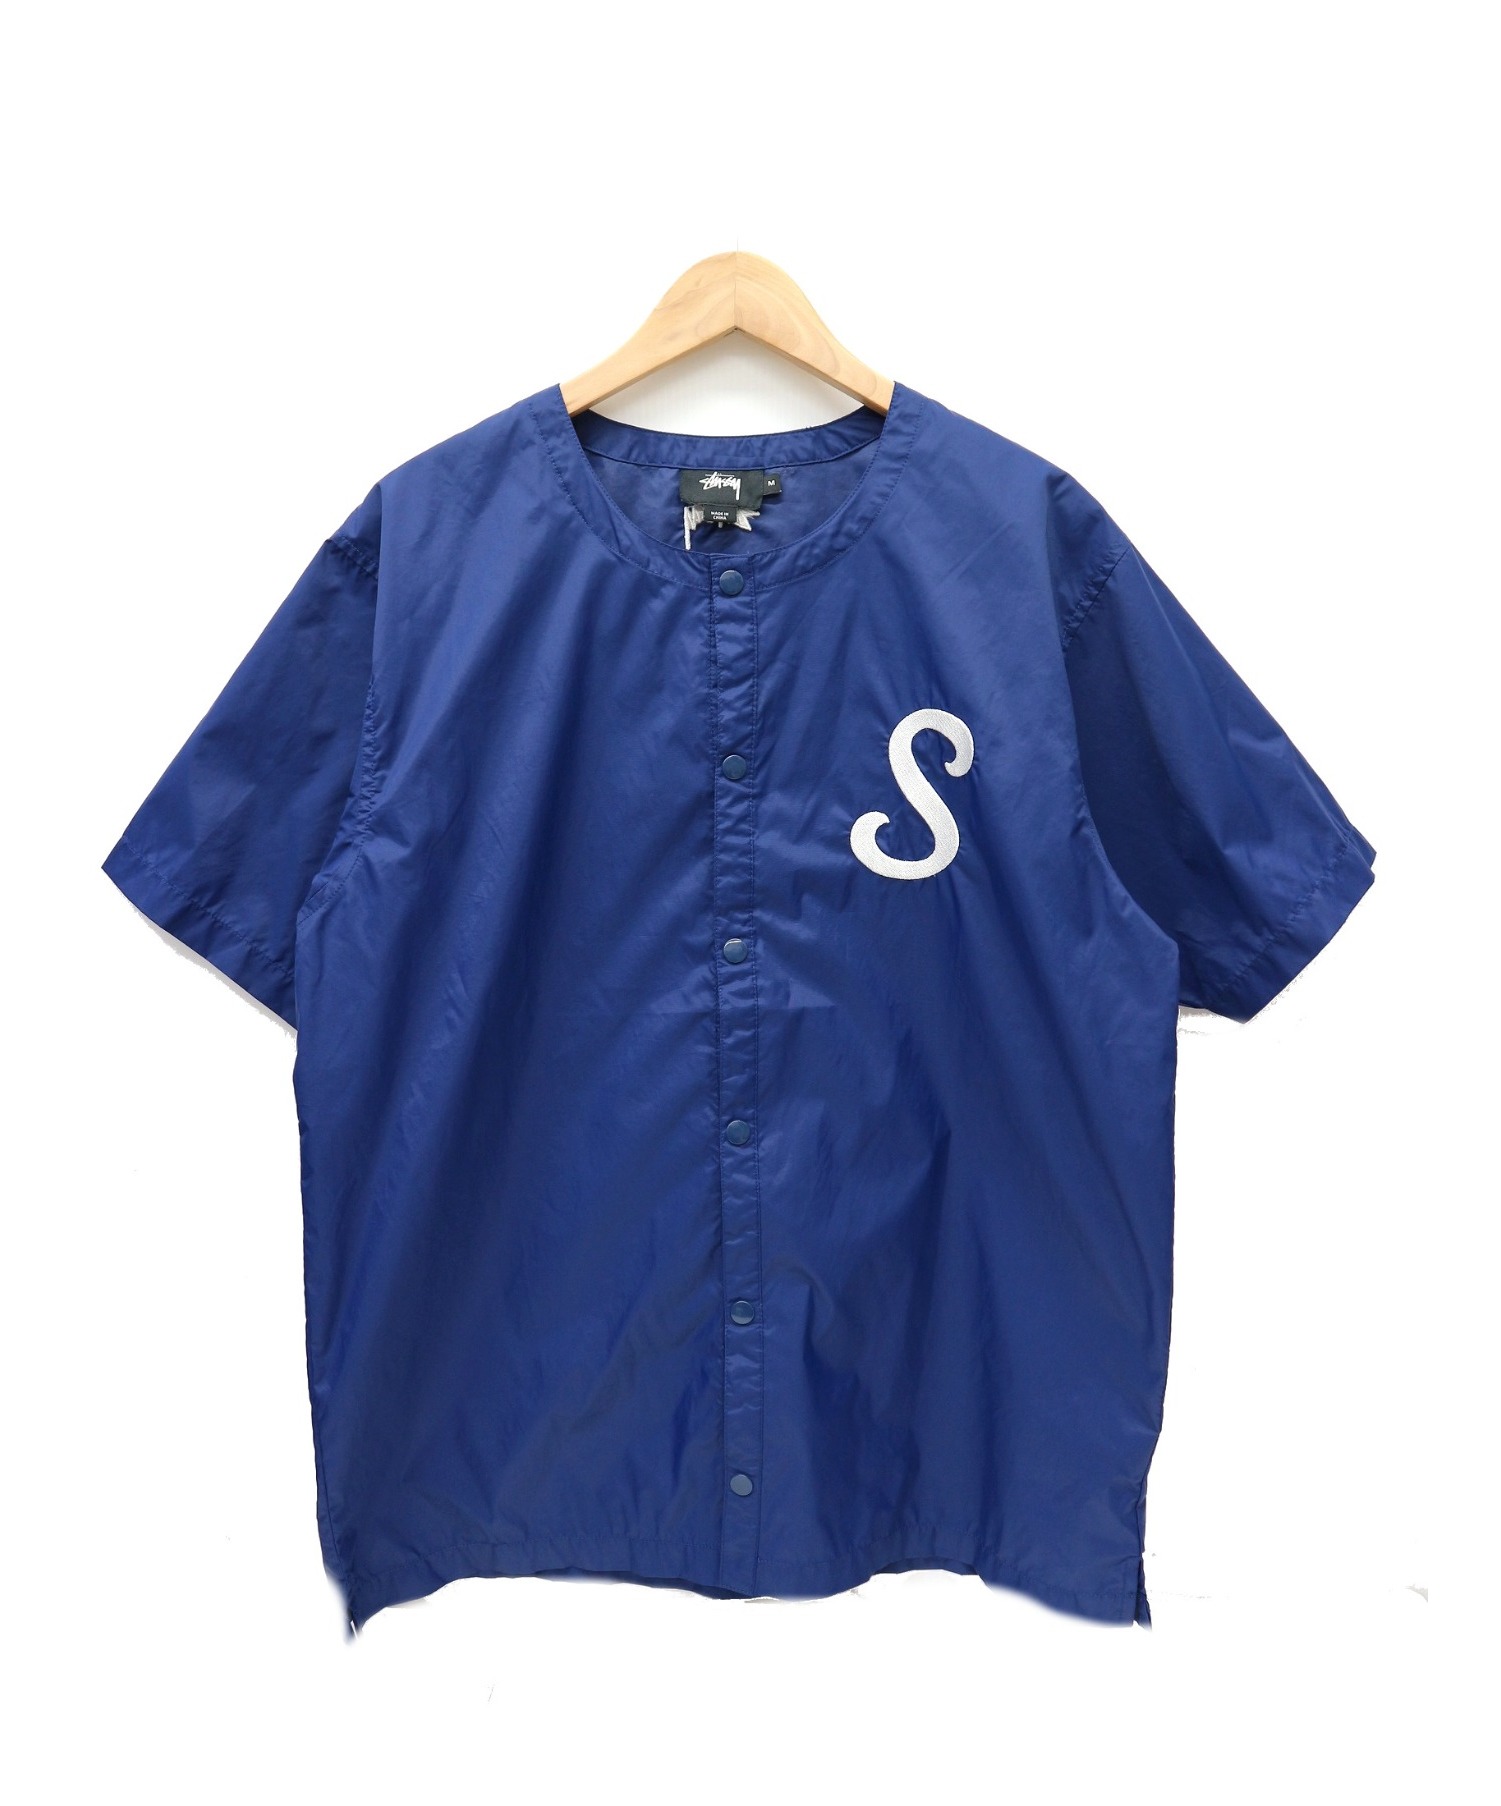 stussy (ステューシー) ナイロンベースボールシャツ ブルー サイズ:M